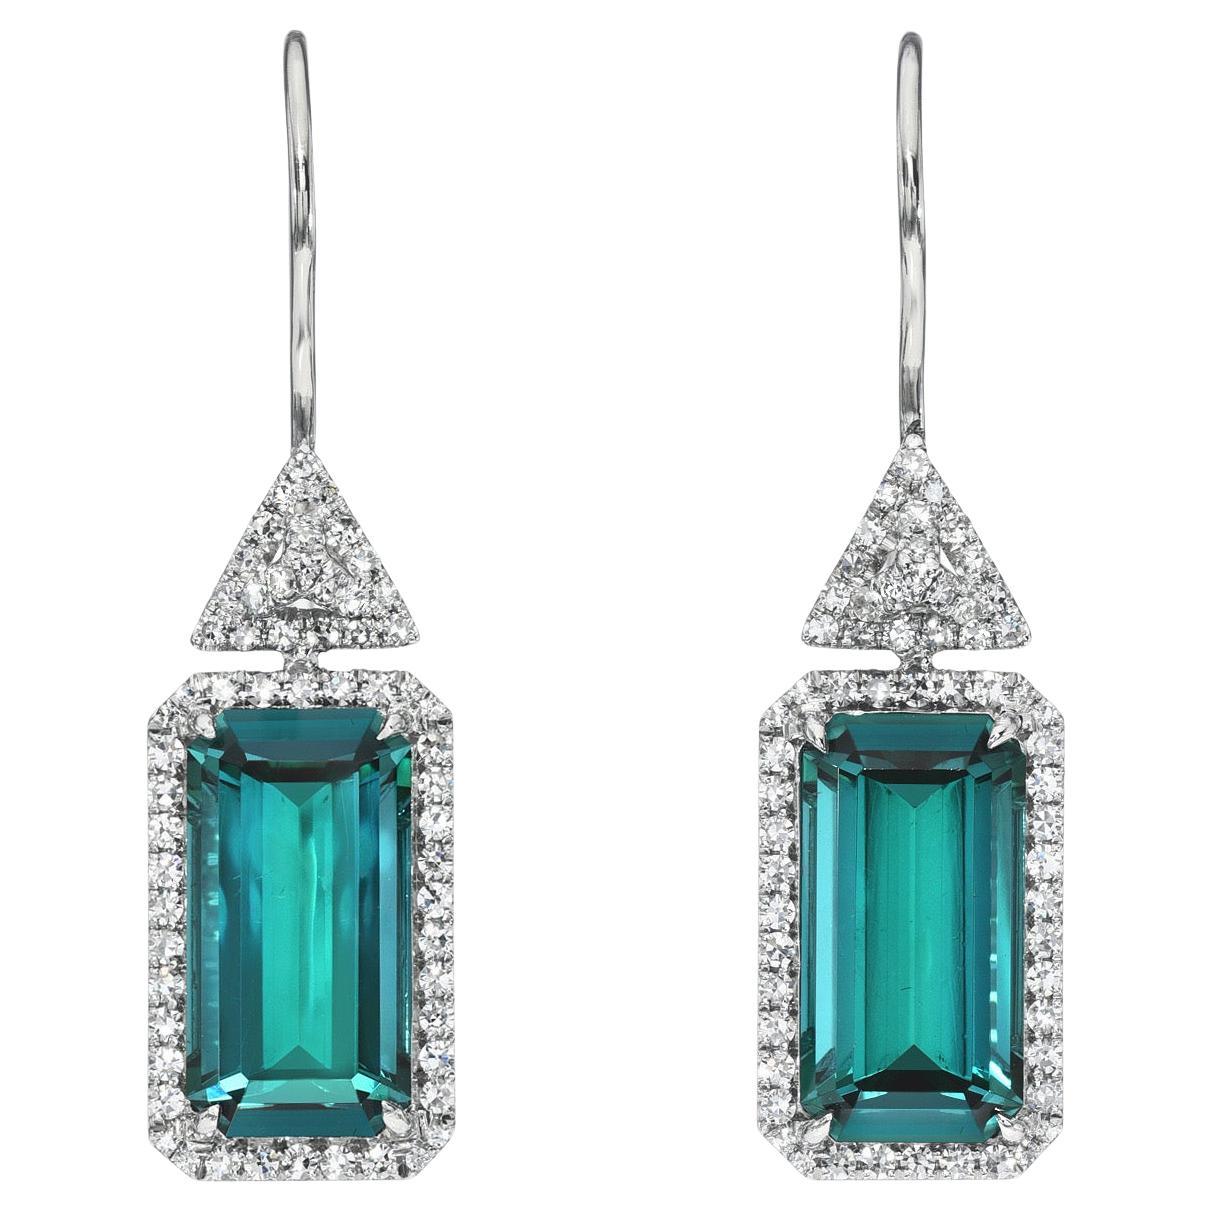 Indicolite Tourmaline Earrings 9.87 Carat Emerald Cut